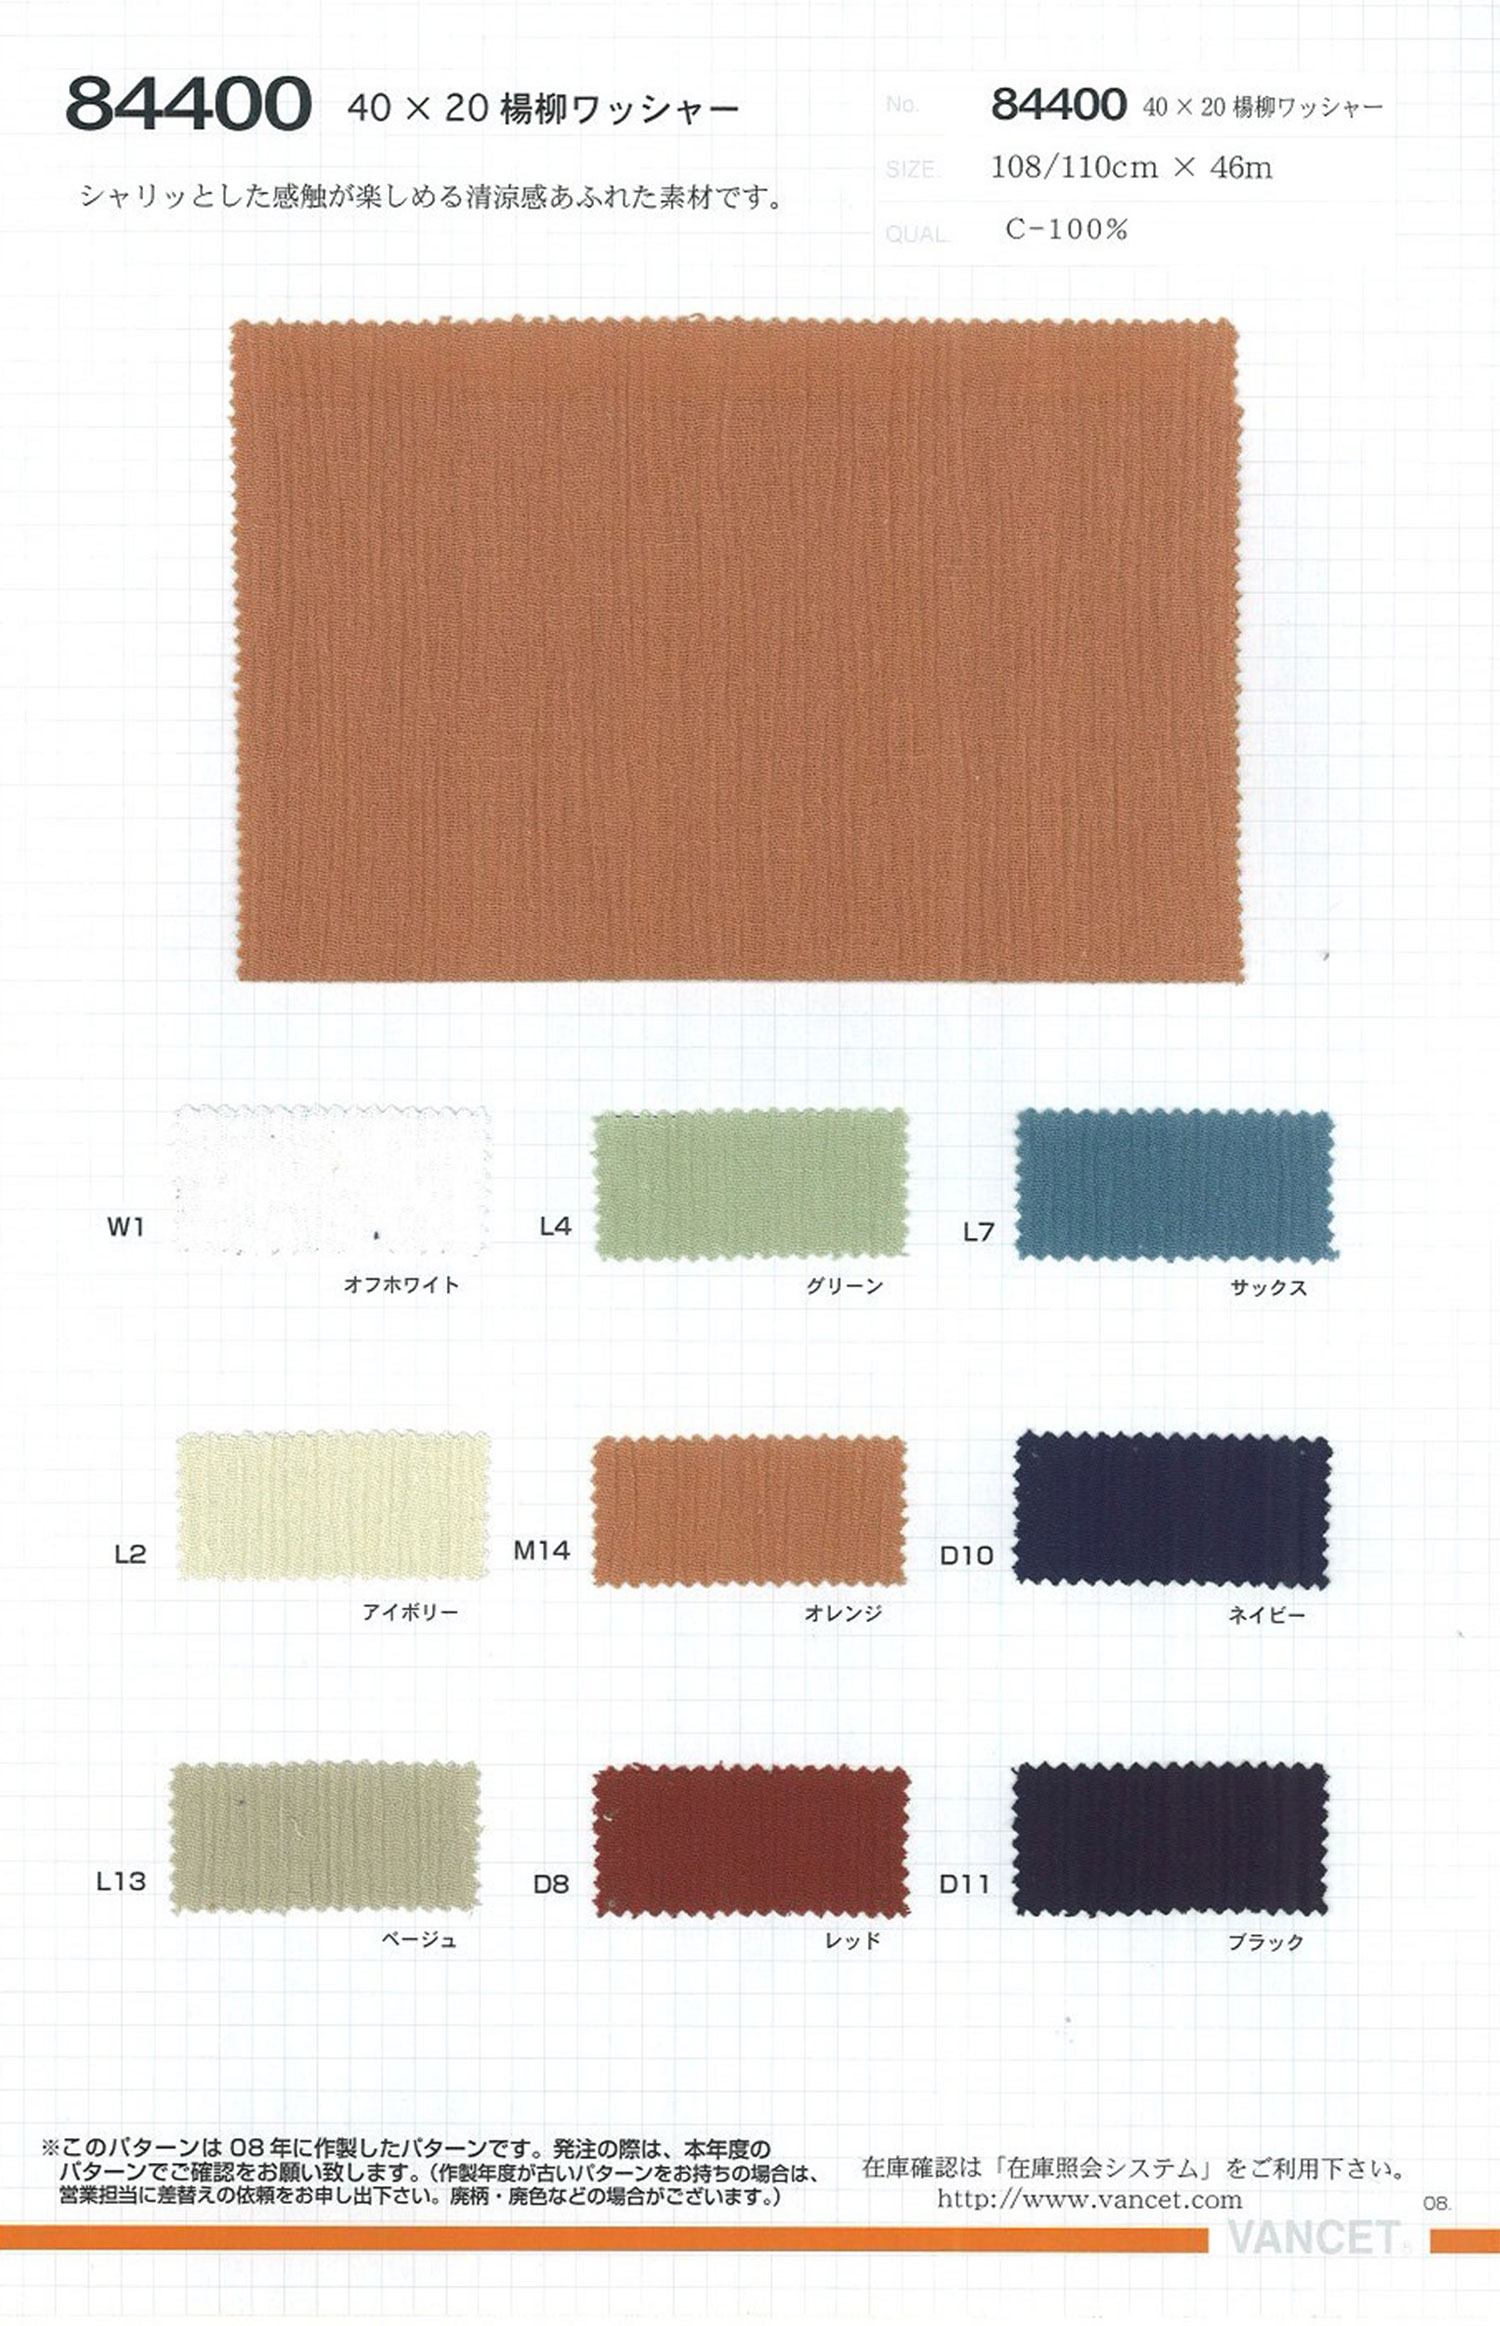 84400 40x20 Yoryu (Wrinkle Crepe) Washer Processing[Textile / Fabric] VANCET